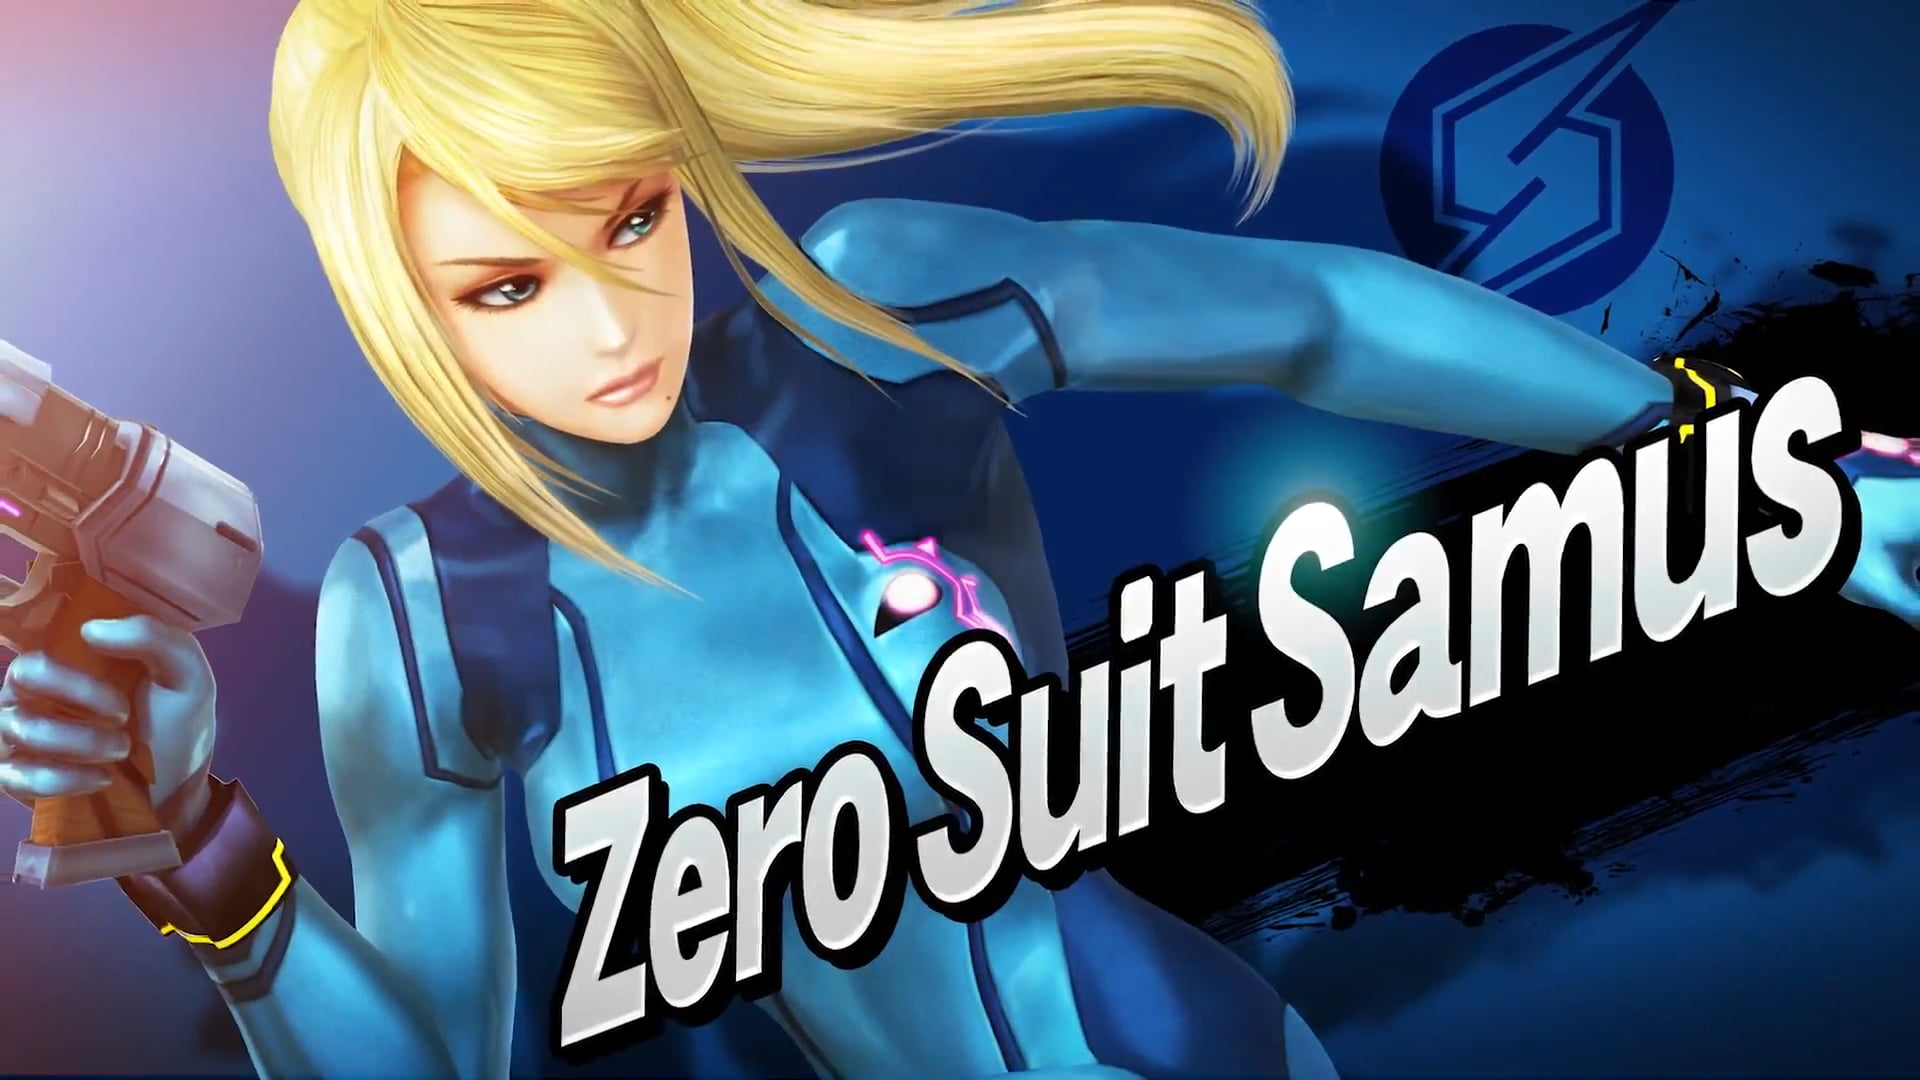 zero suits samus text, Super Smash Brothers, Samus Aran